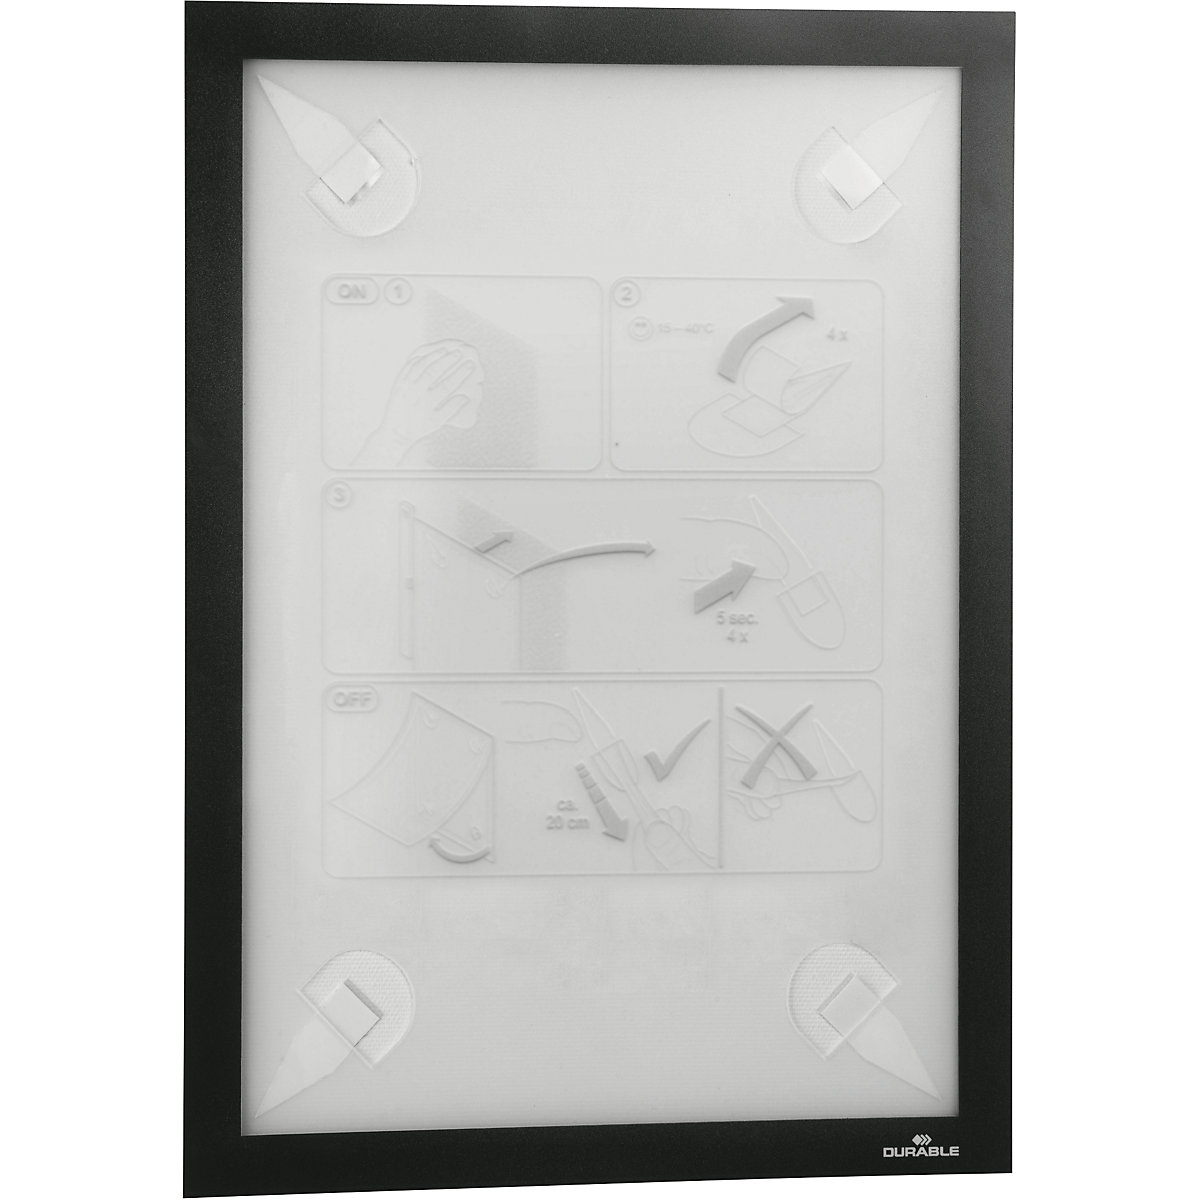 DURAFRAME® WALLPAPER display frame - DURABLE